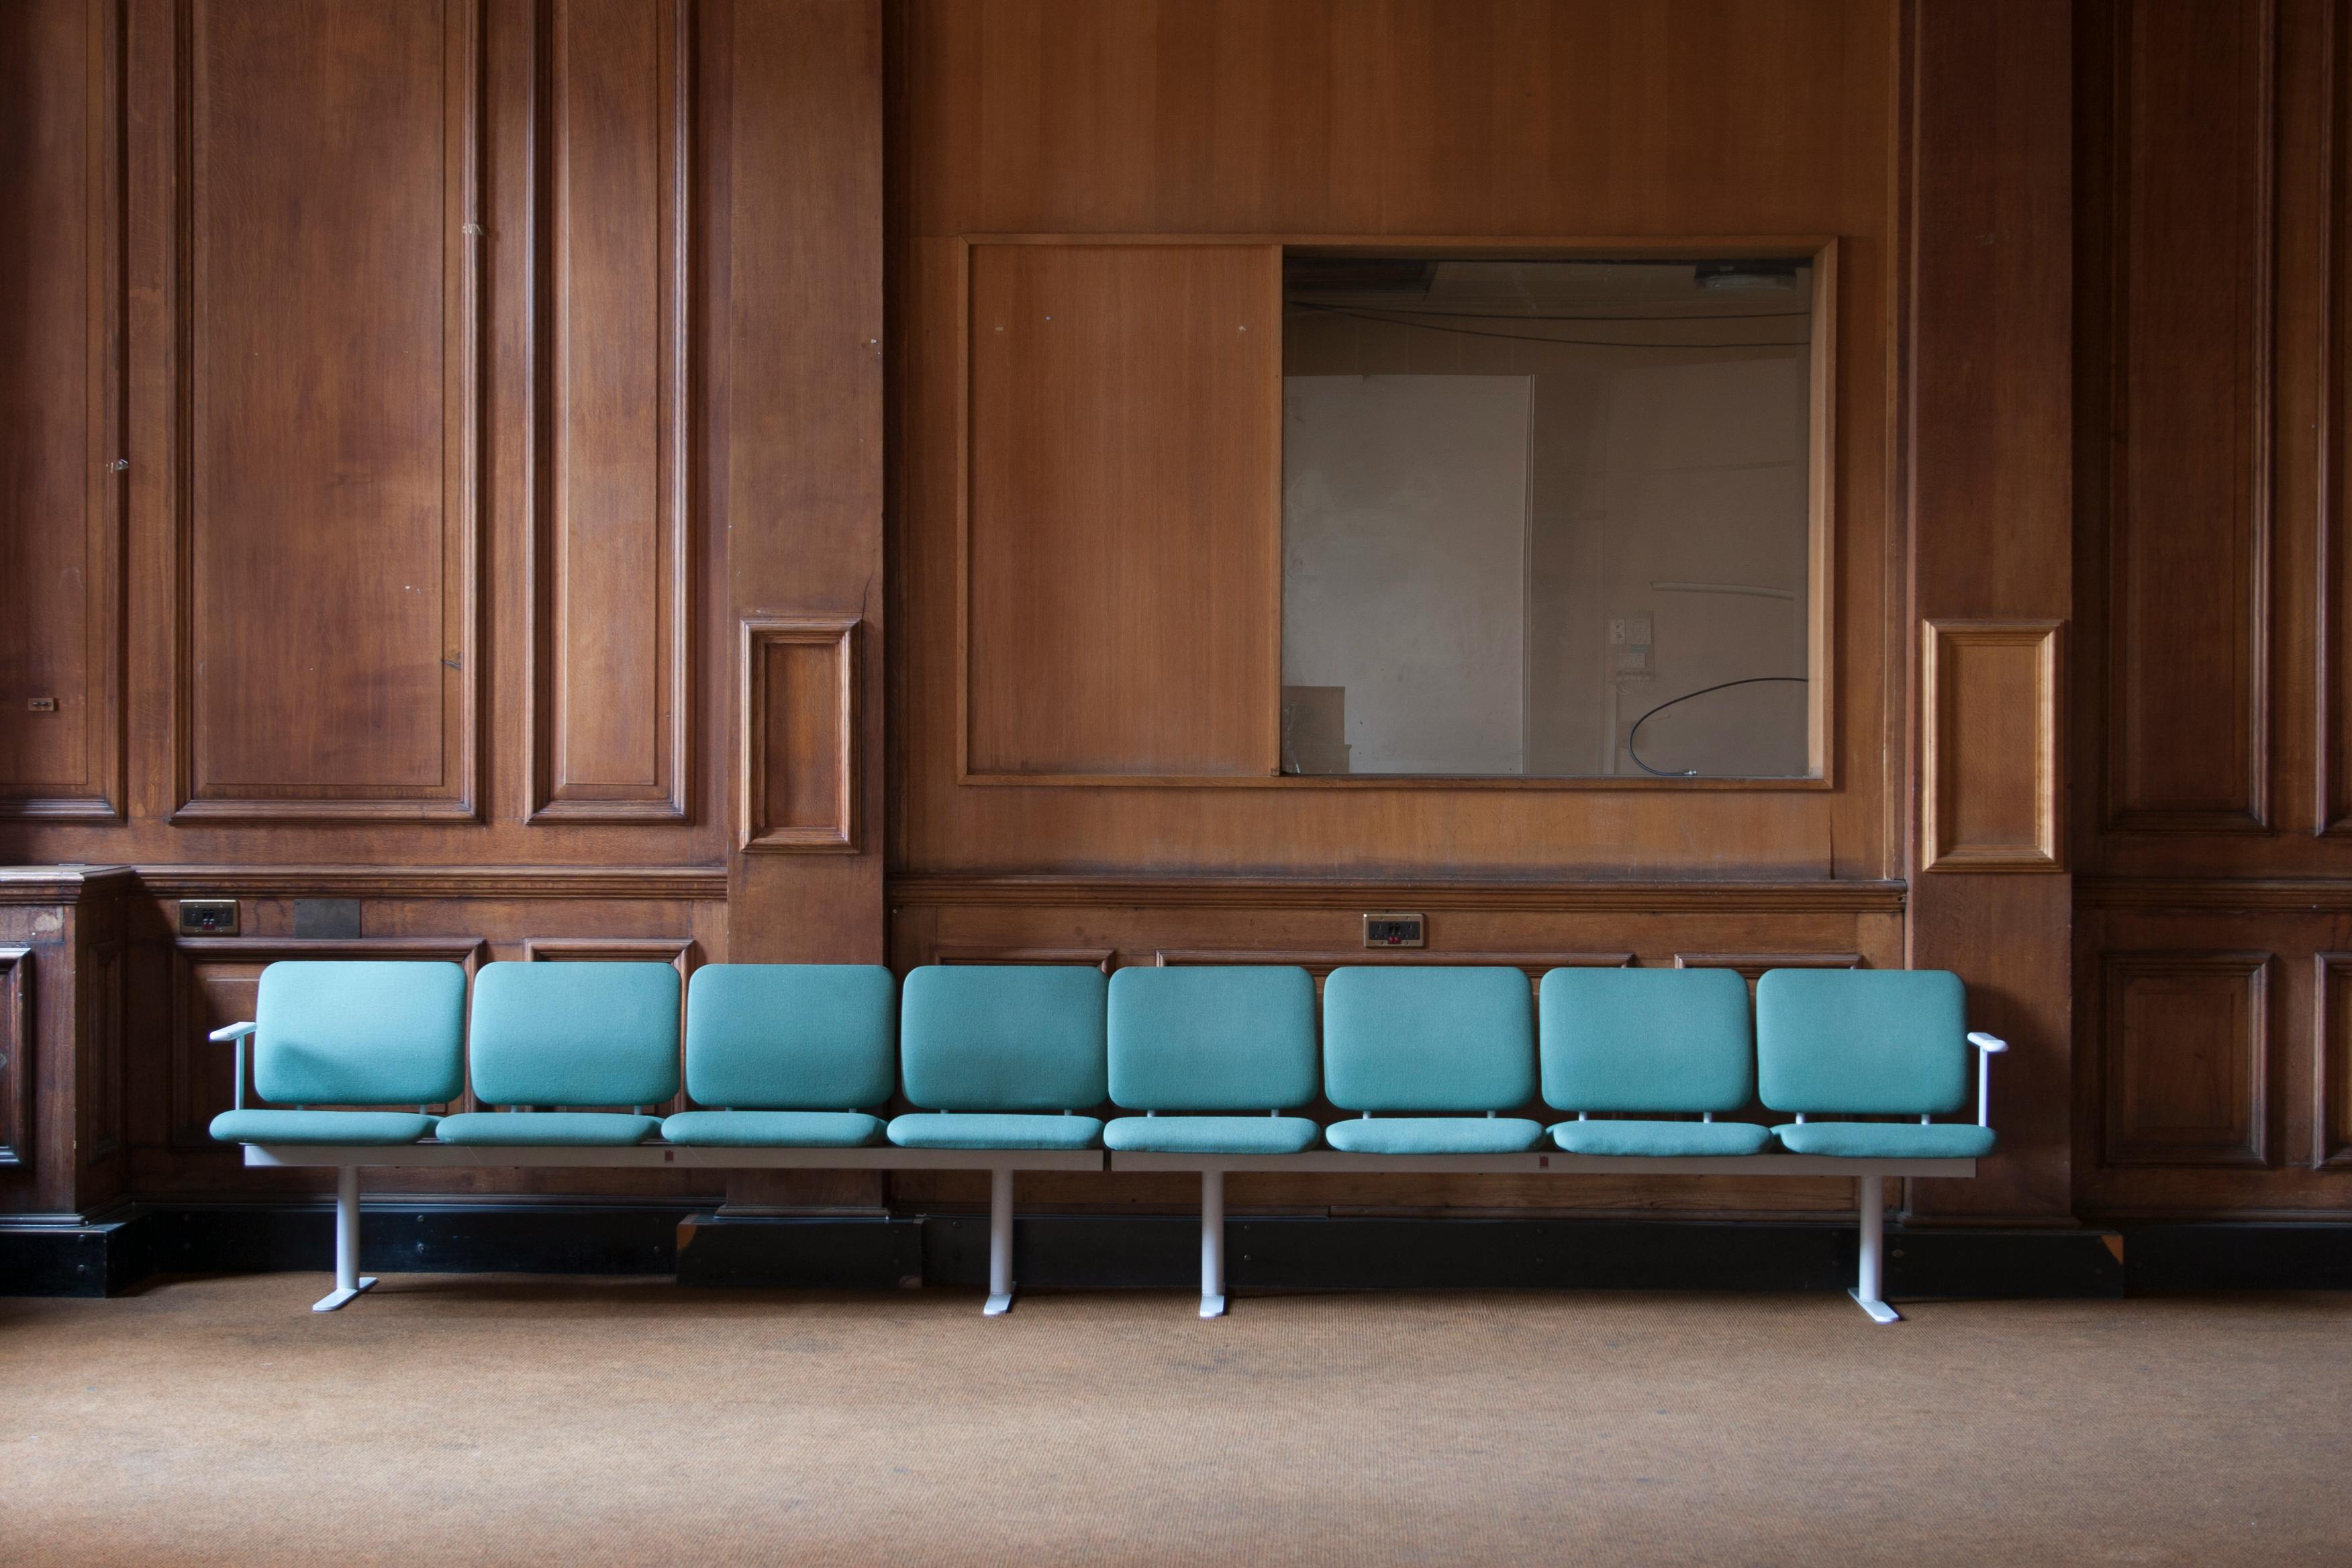 Free stock photo of hospital, seats, waiting room